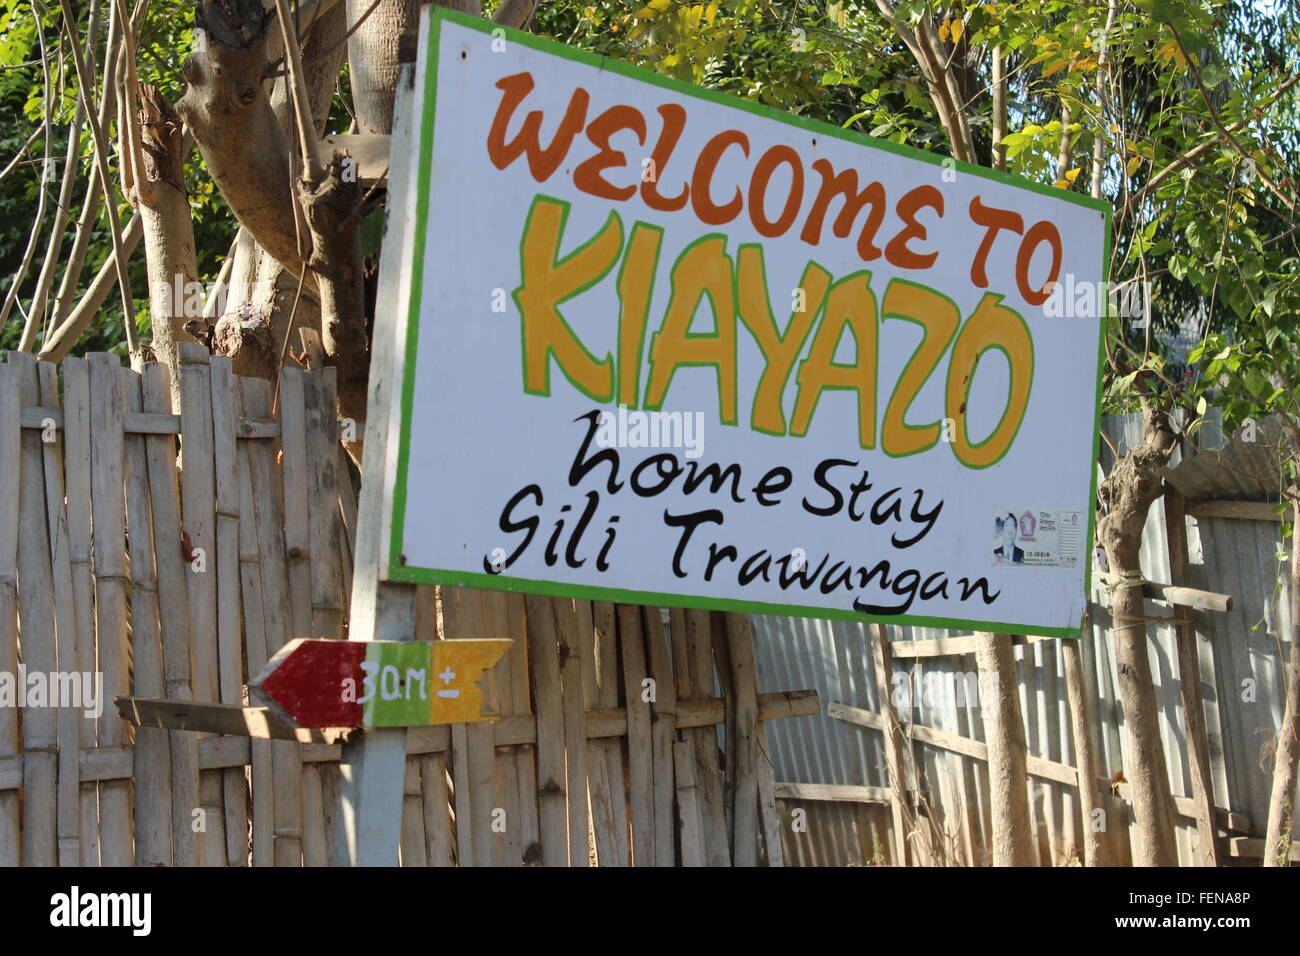 Welcome to Kiayazo sign, Gili Trawangan Stock Photo